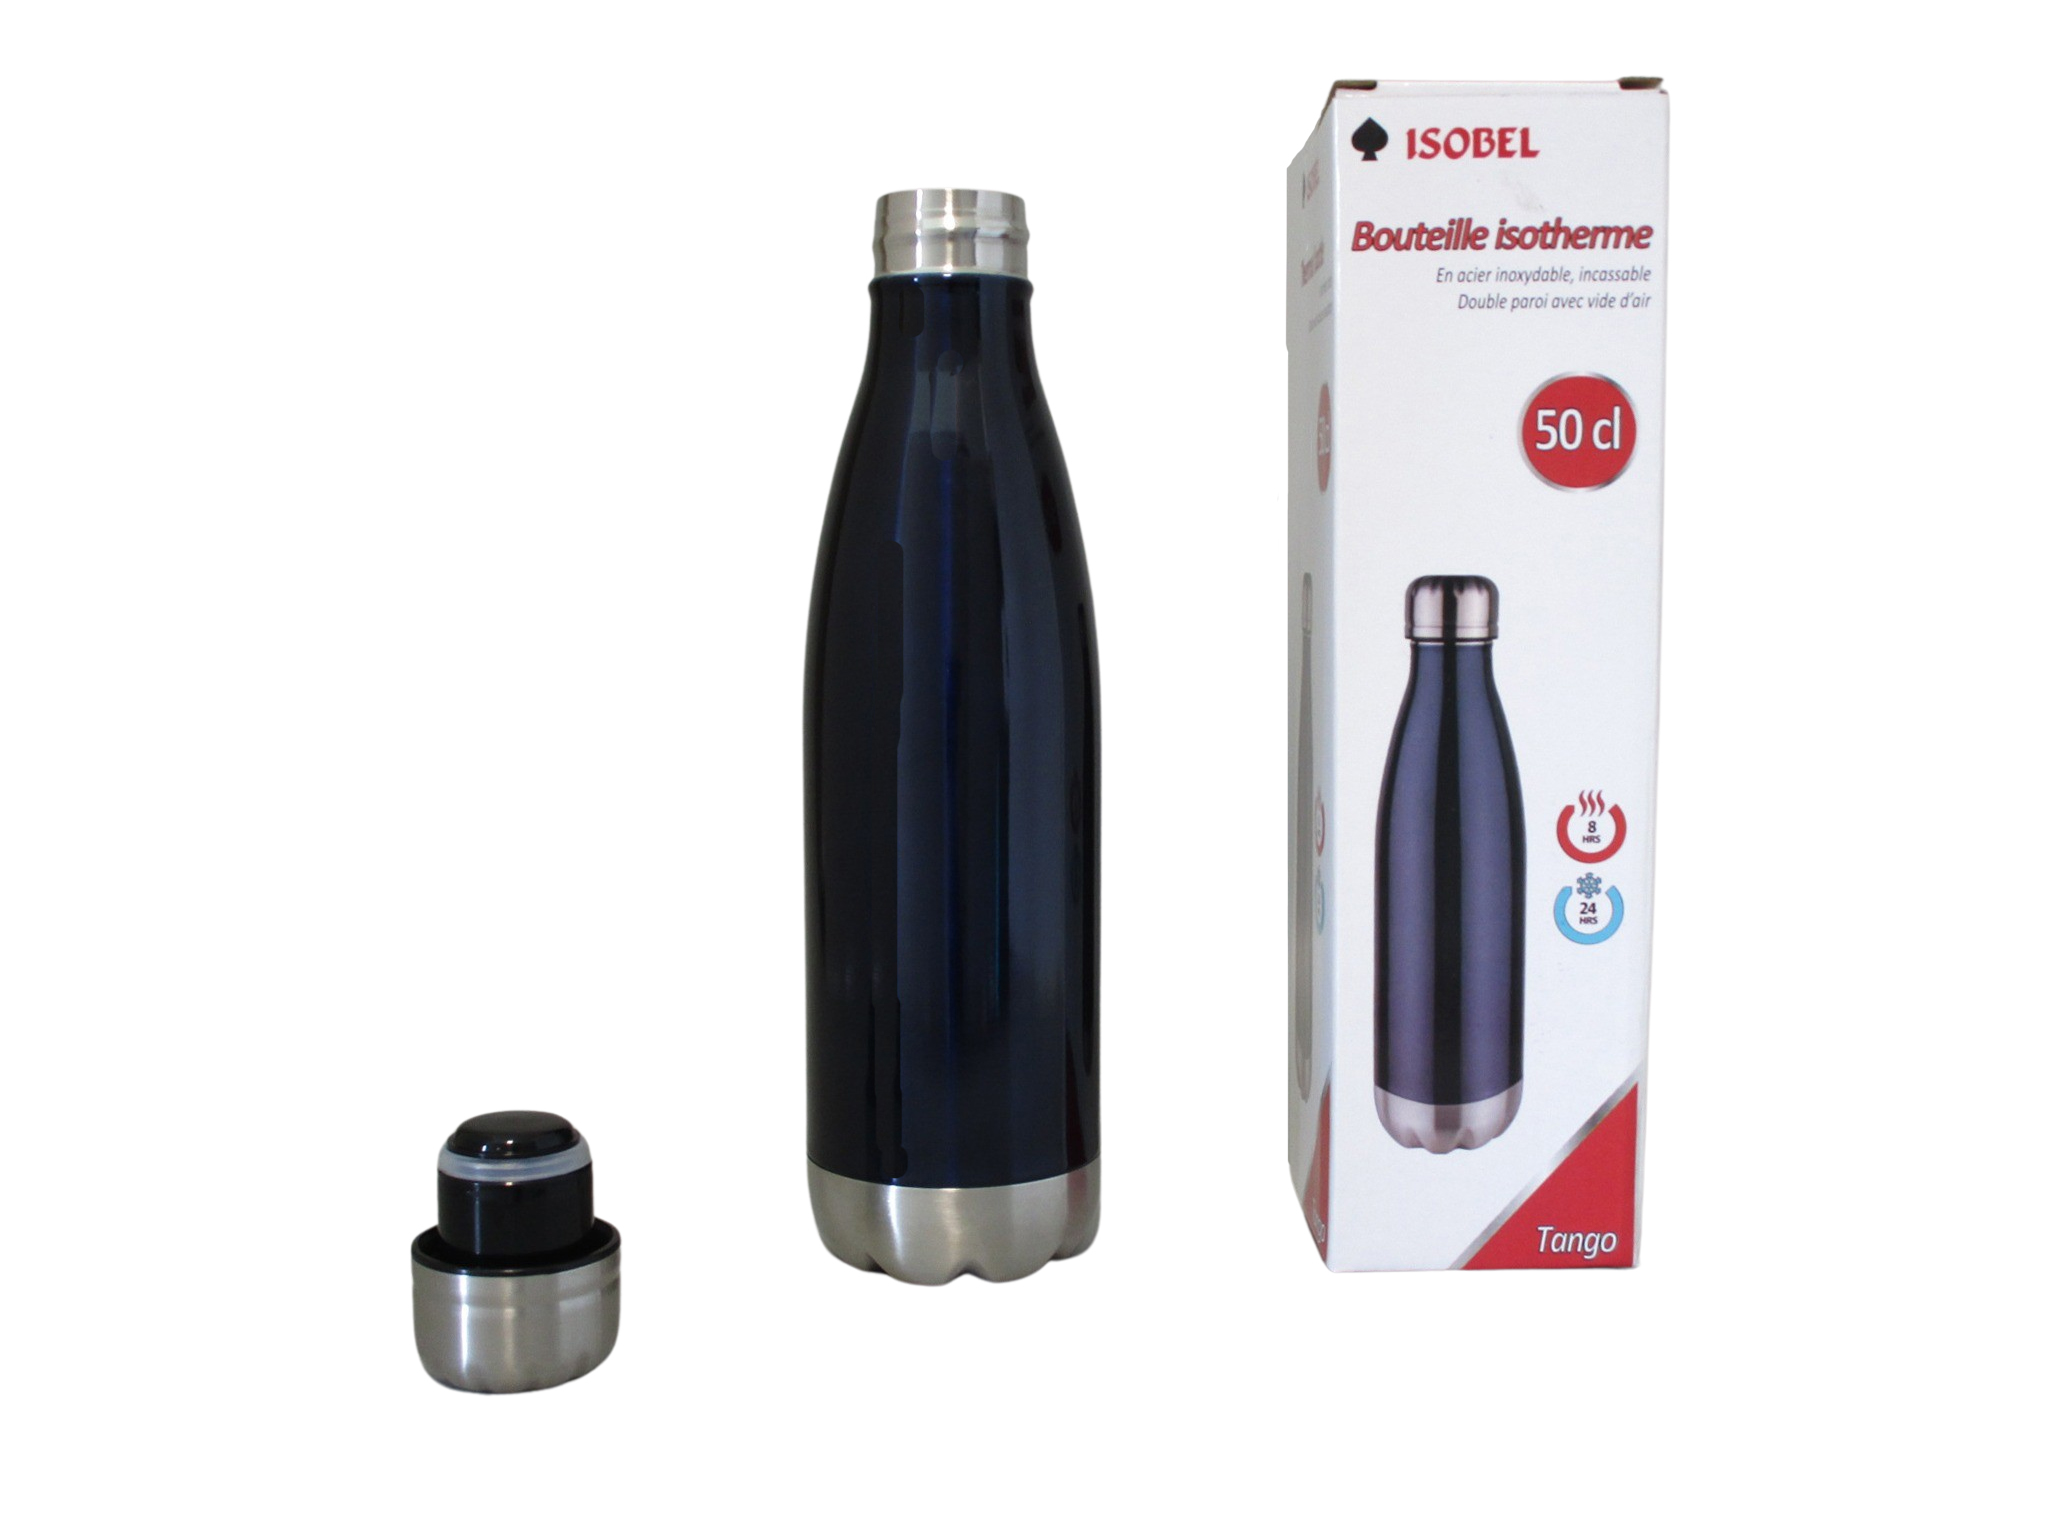 TANGO050-900 - Bouteille isotherme inox incassable brossé 0.50 L - Isobel